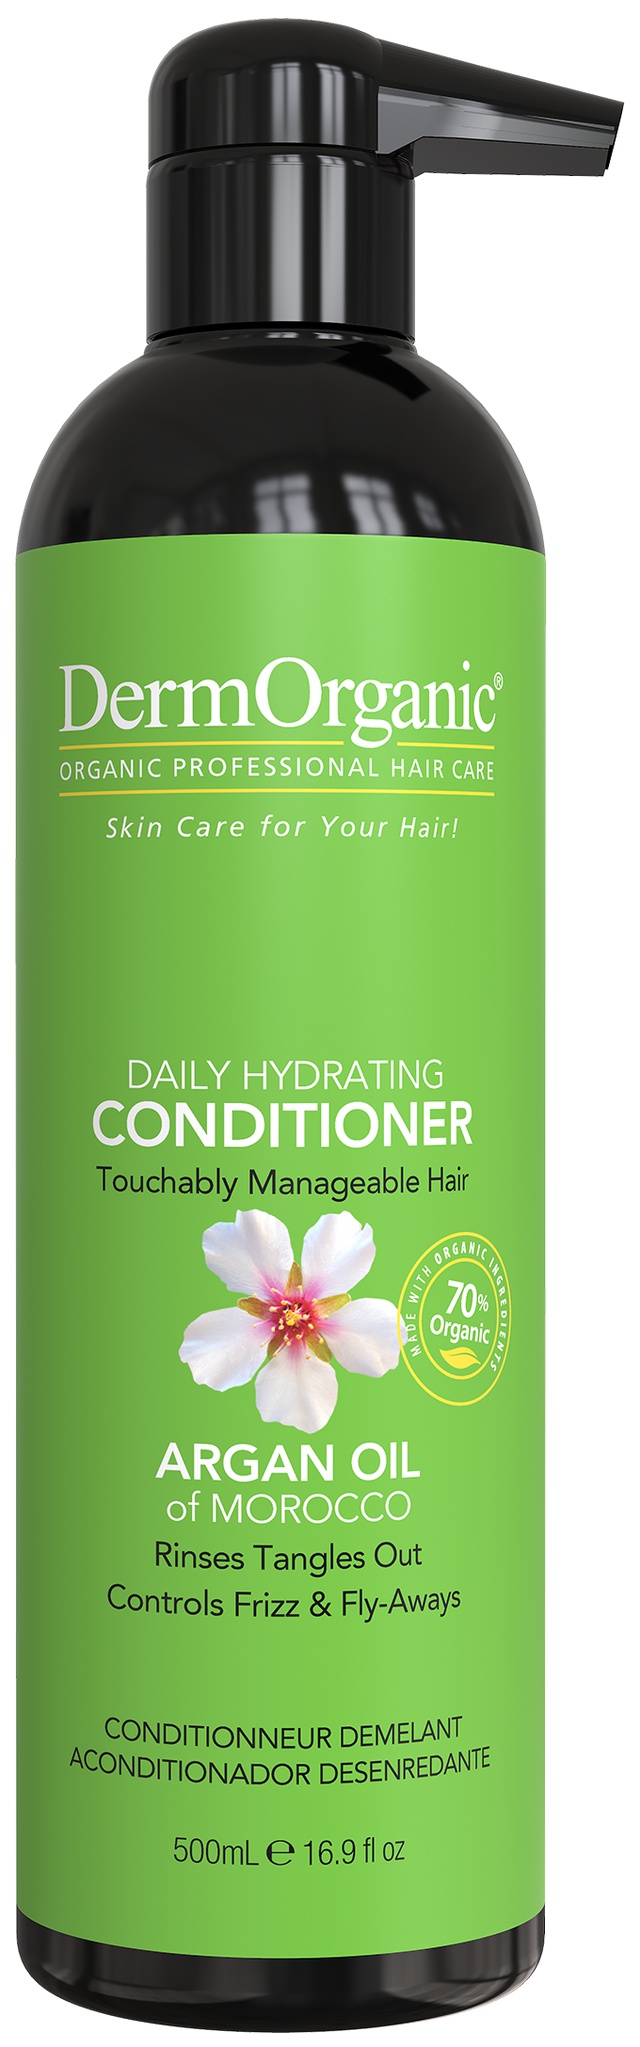 DermOrganic Daily Hydrating Conditioner